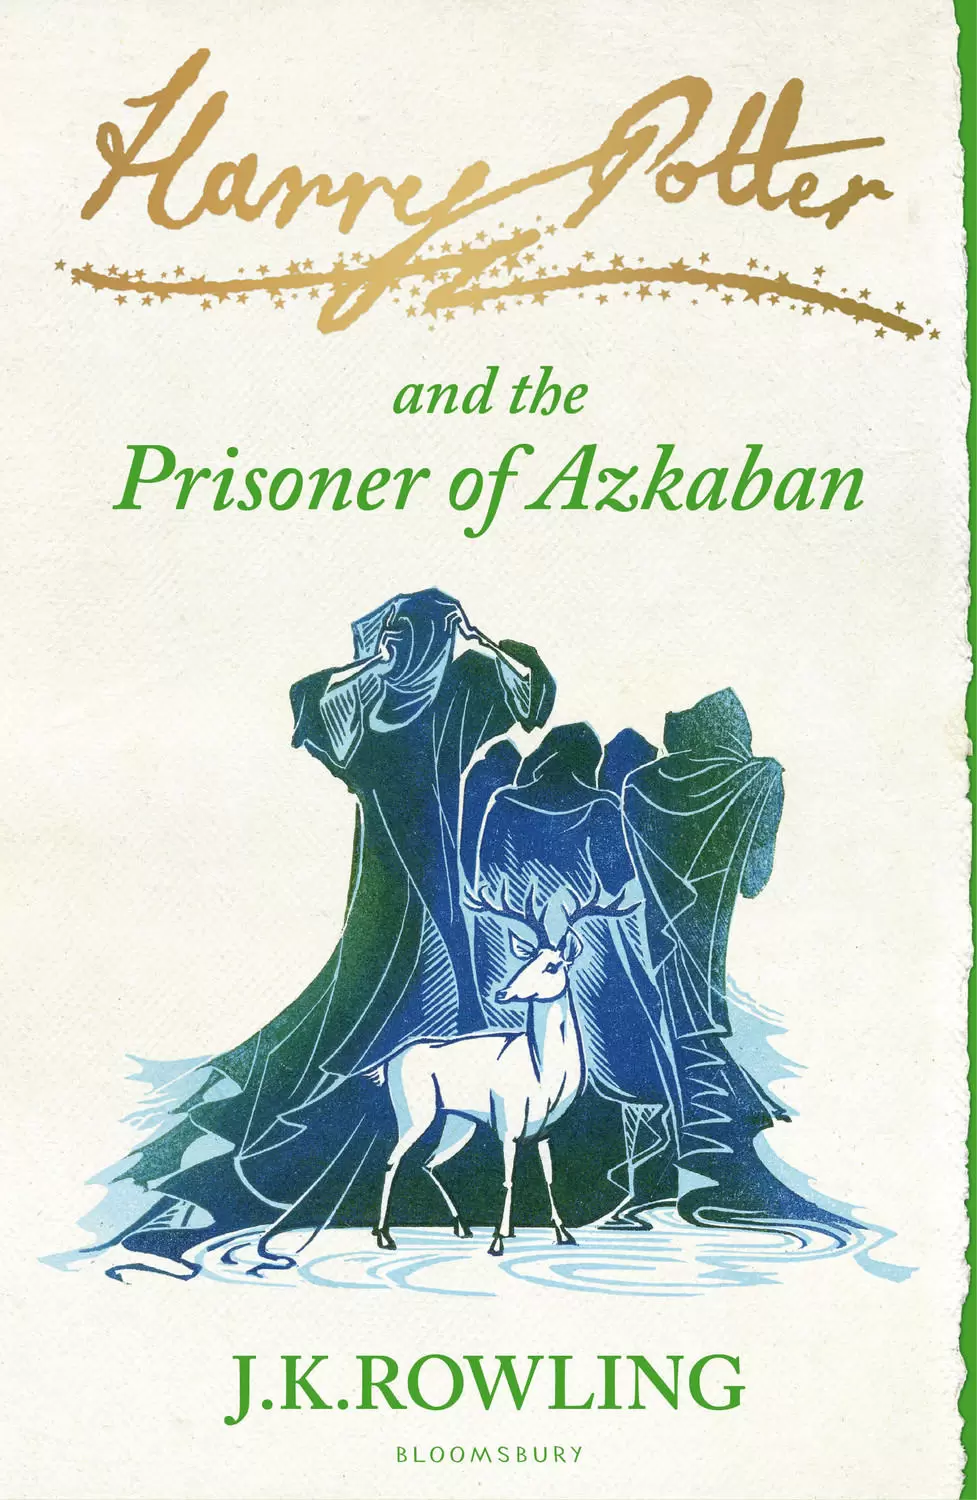 Livres Harry Potter et Animaux Fantastiques - Harry Potter eand the Prisoner of Azkaban